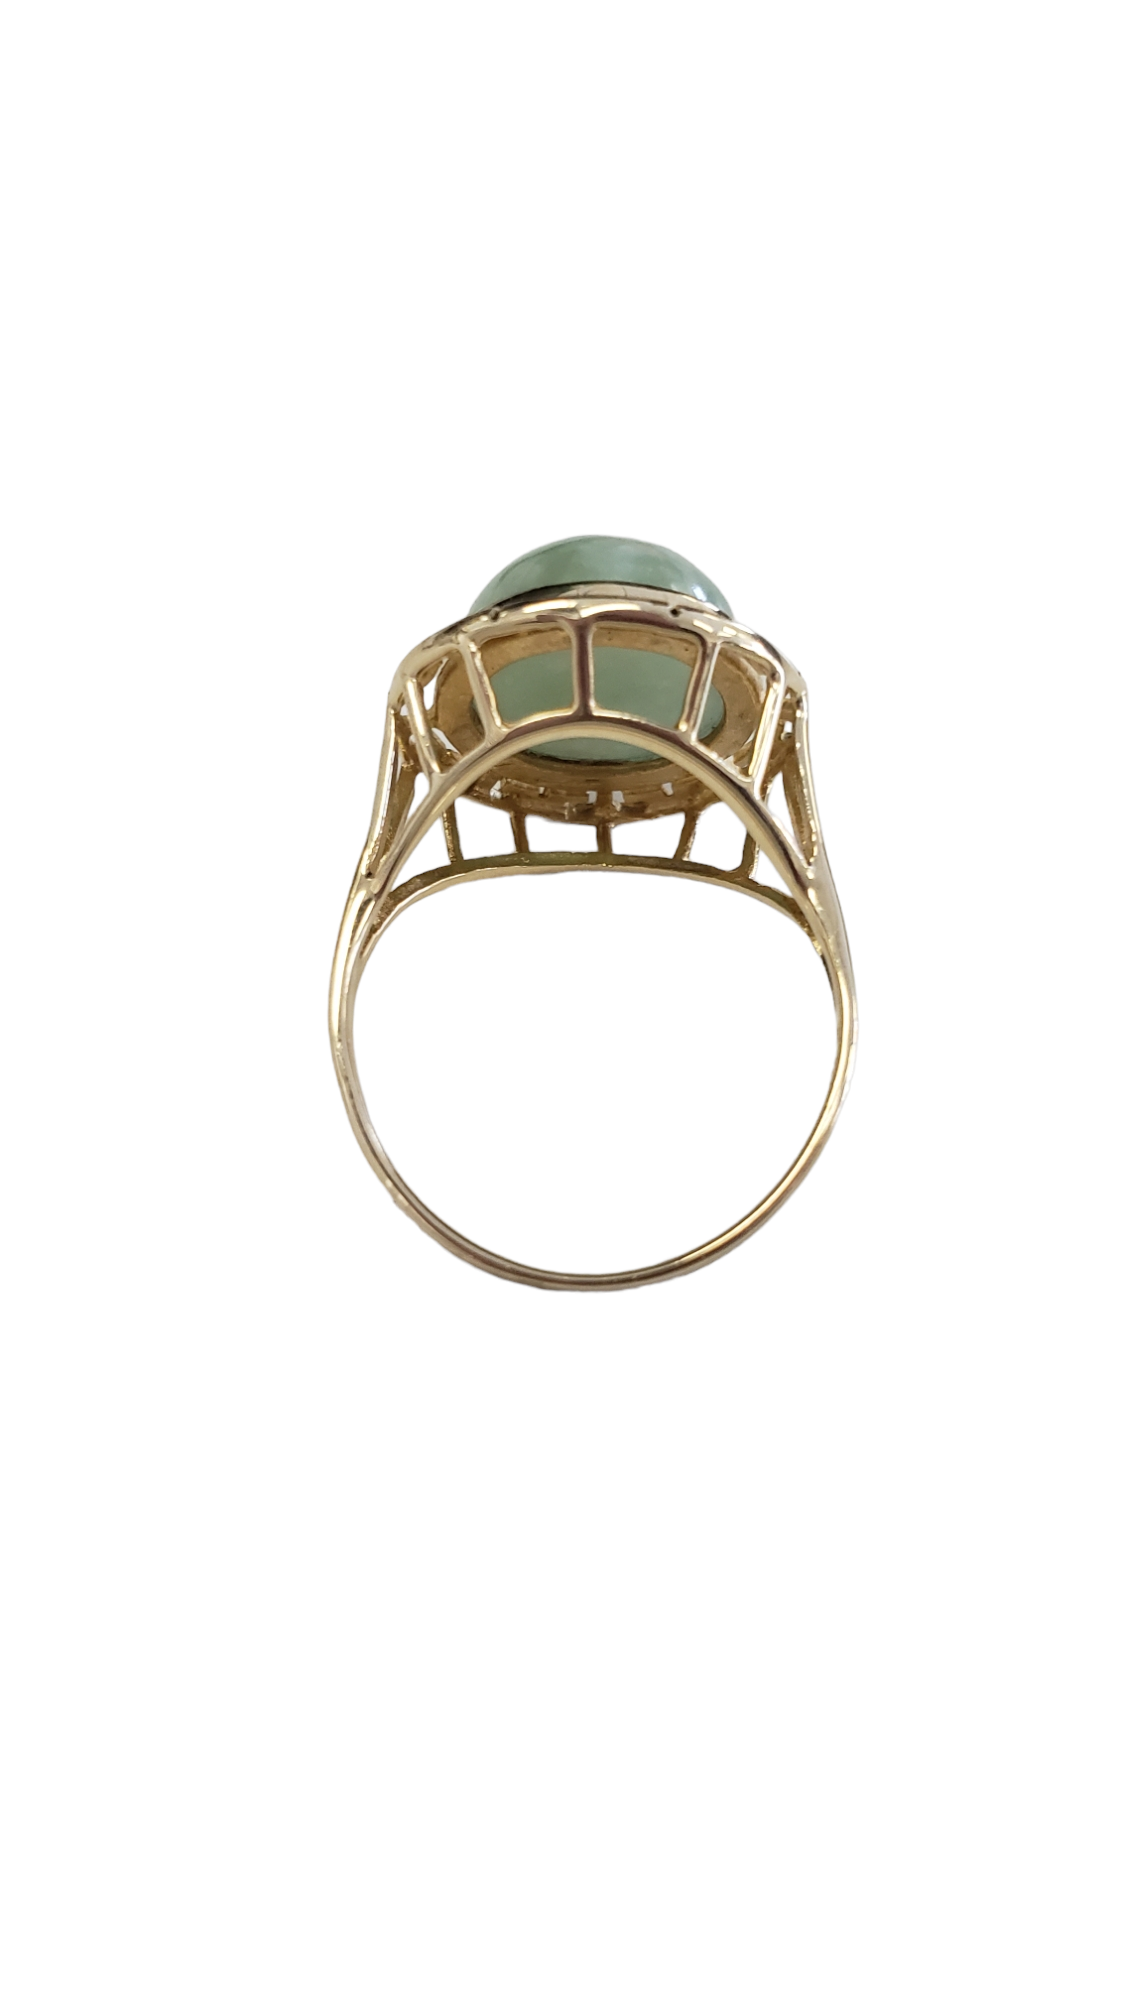 Cabochon Round Green Jade Greek Key Style Ring made in 14-Karat Yellow Gold